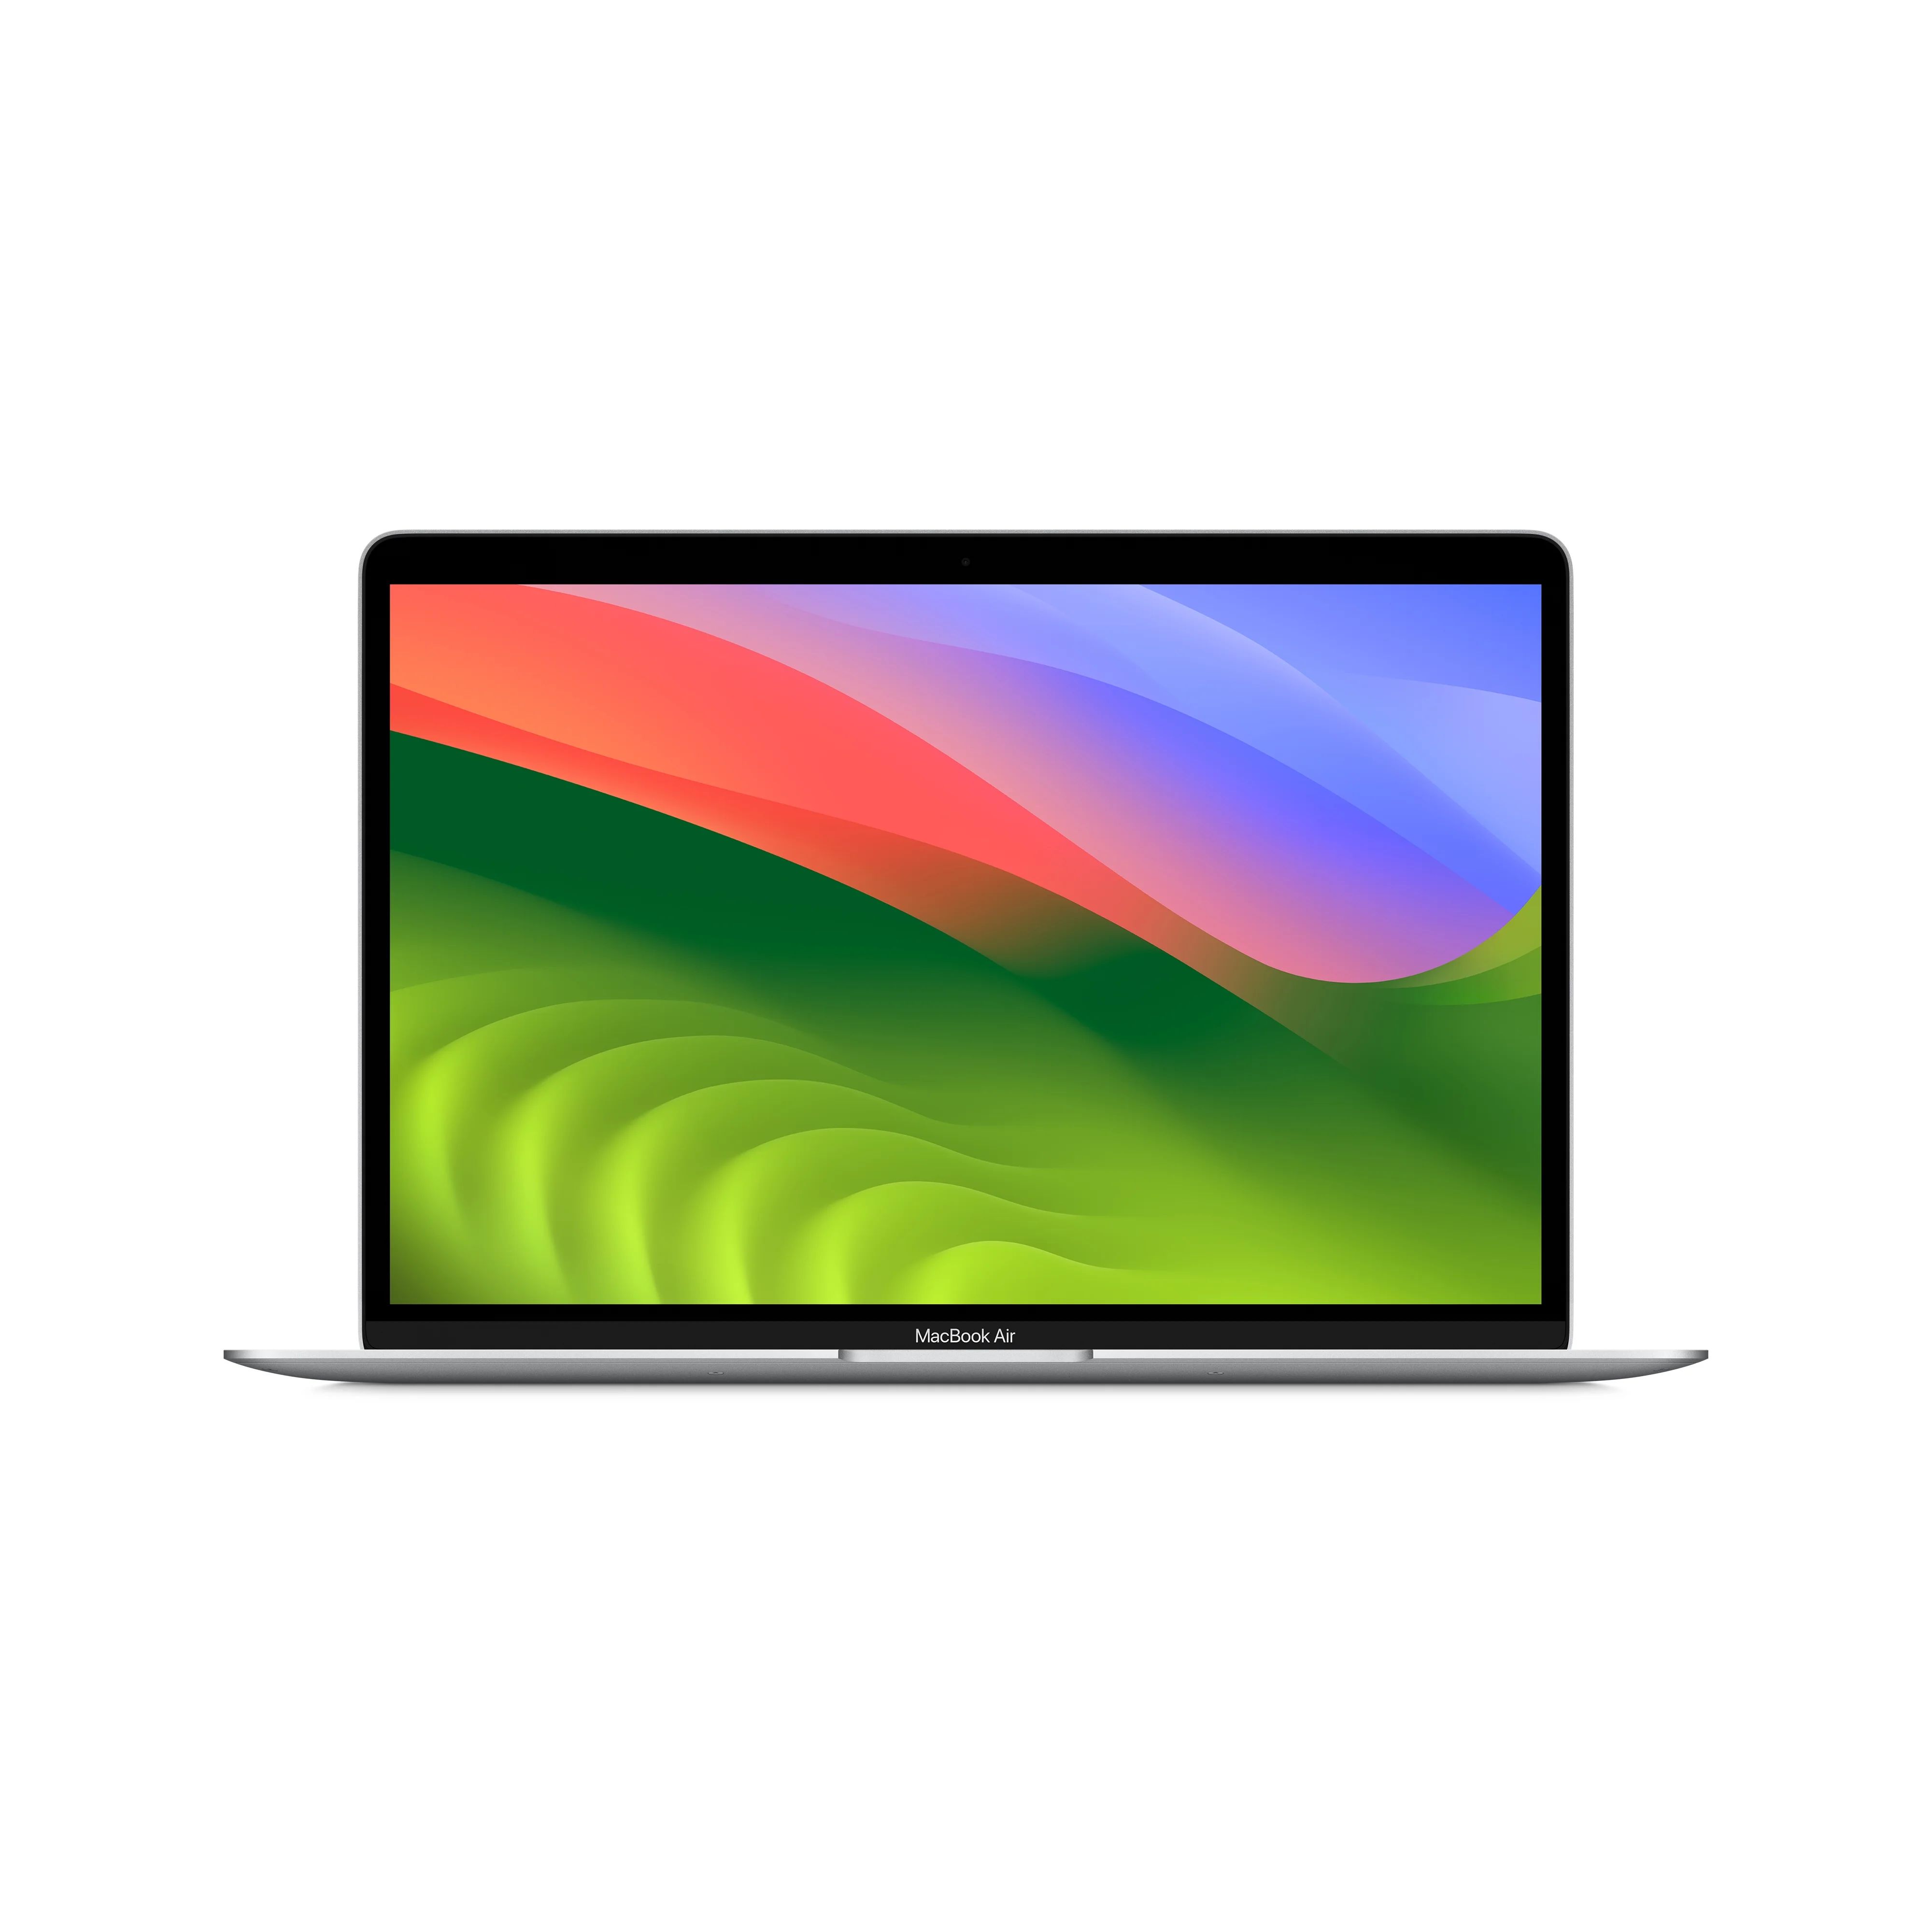 Apple MacBook Air 13.3 inch Laptop - Silver. M1 Chip, 8GB RAM, 256GB storage | Walmart (US)